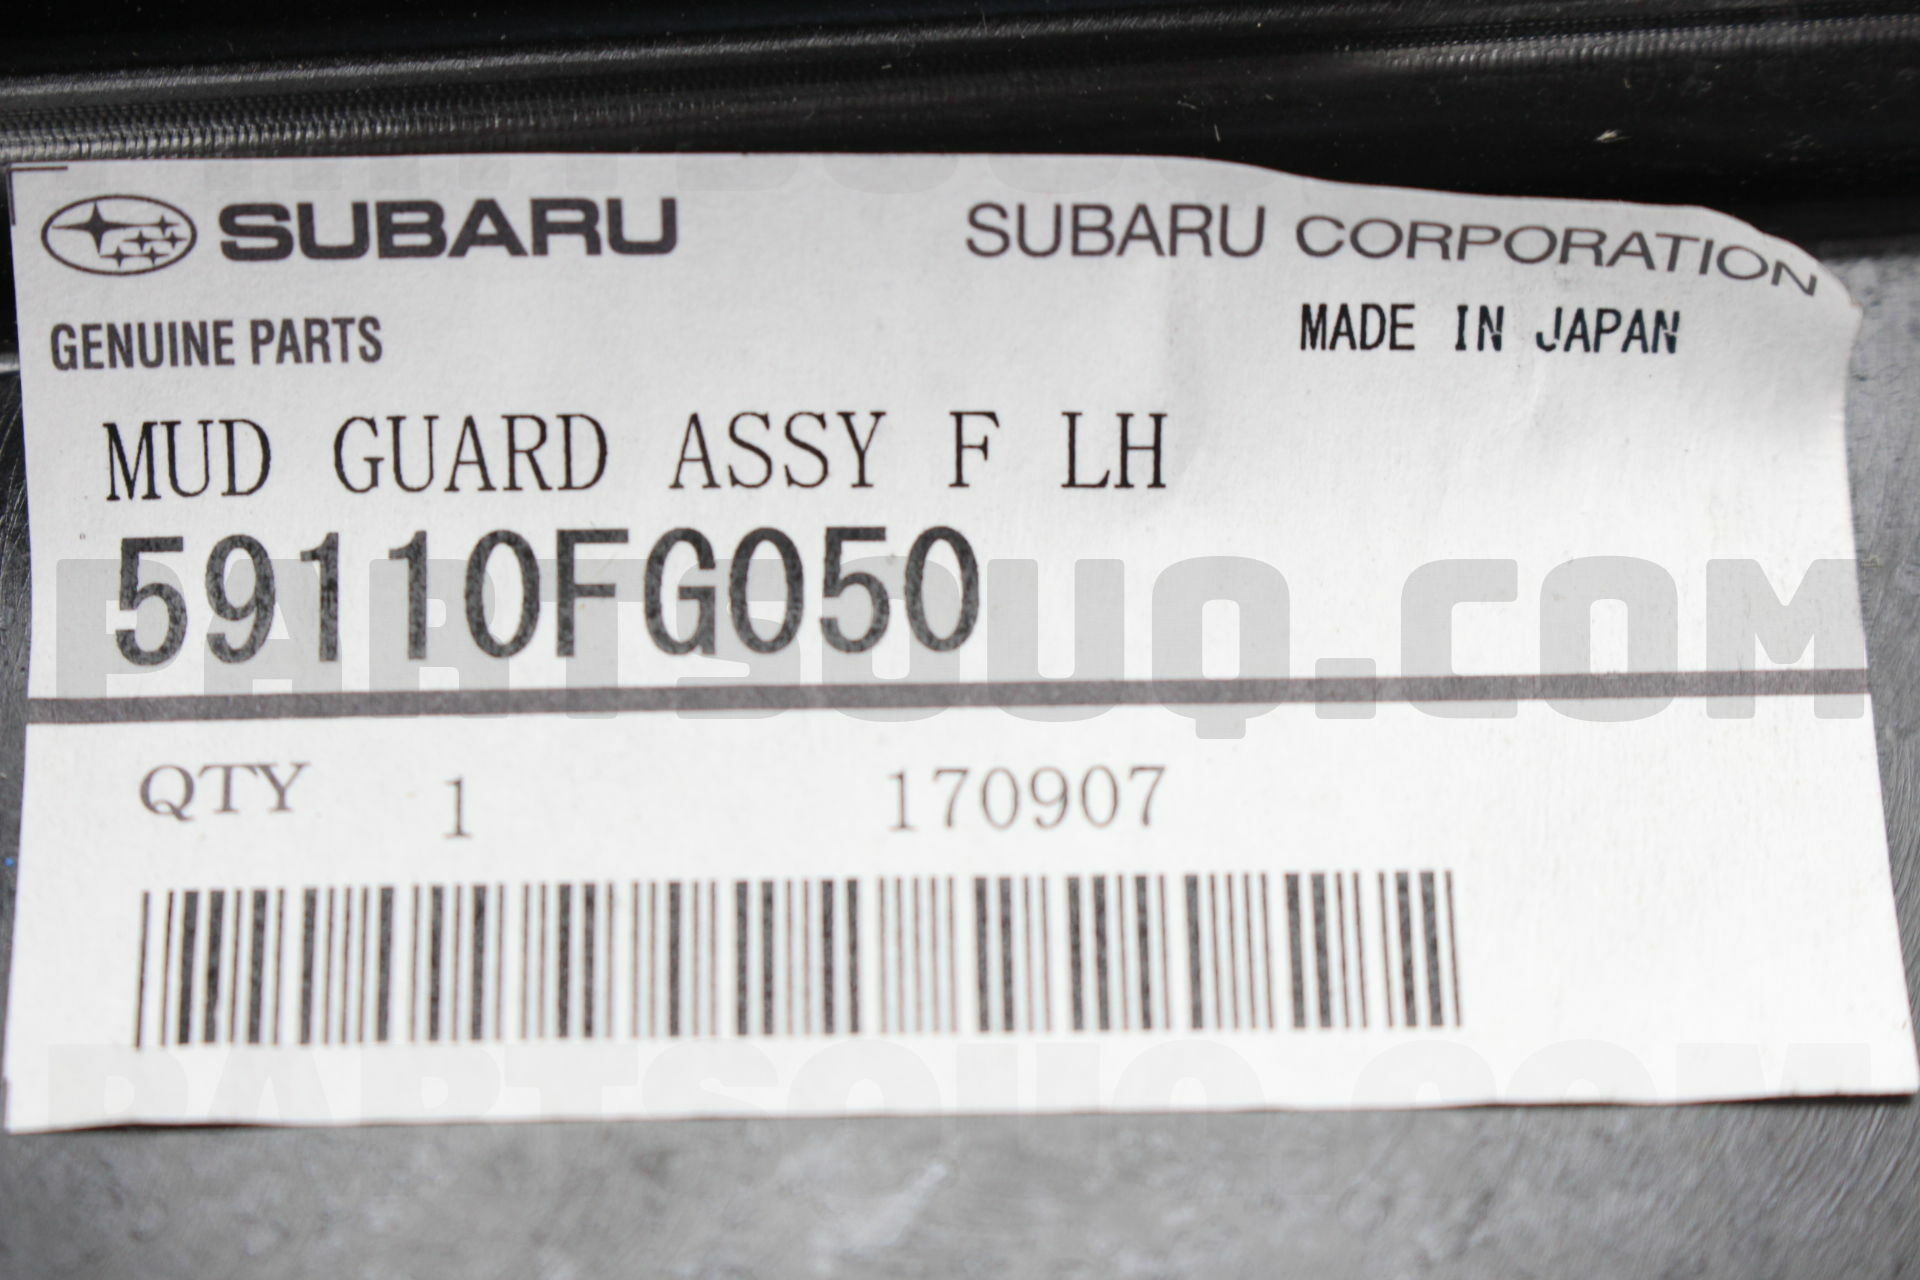 59110FG050 Subaru Mud guard assy f lh 59110FG050